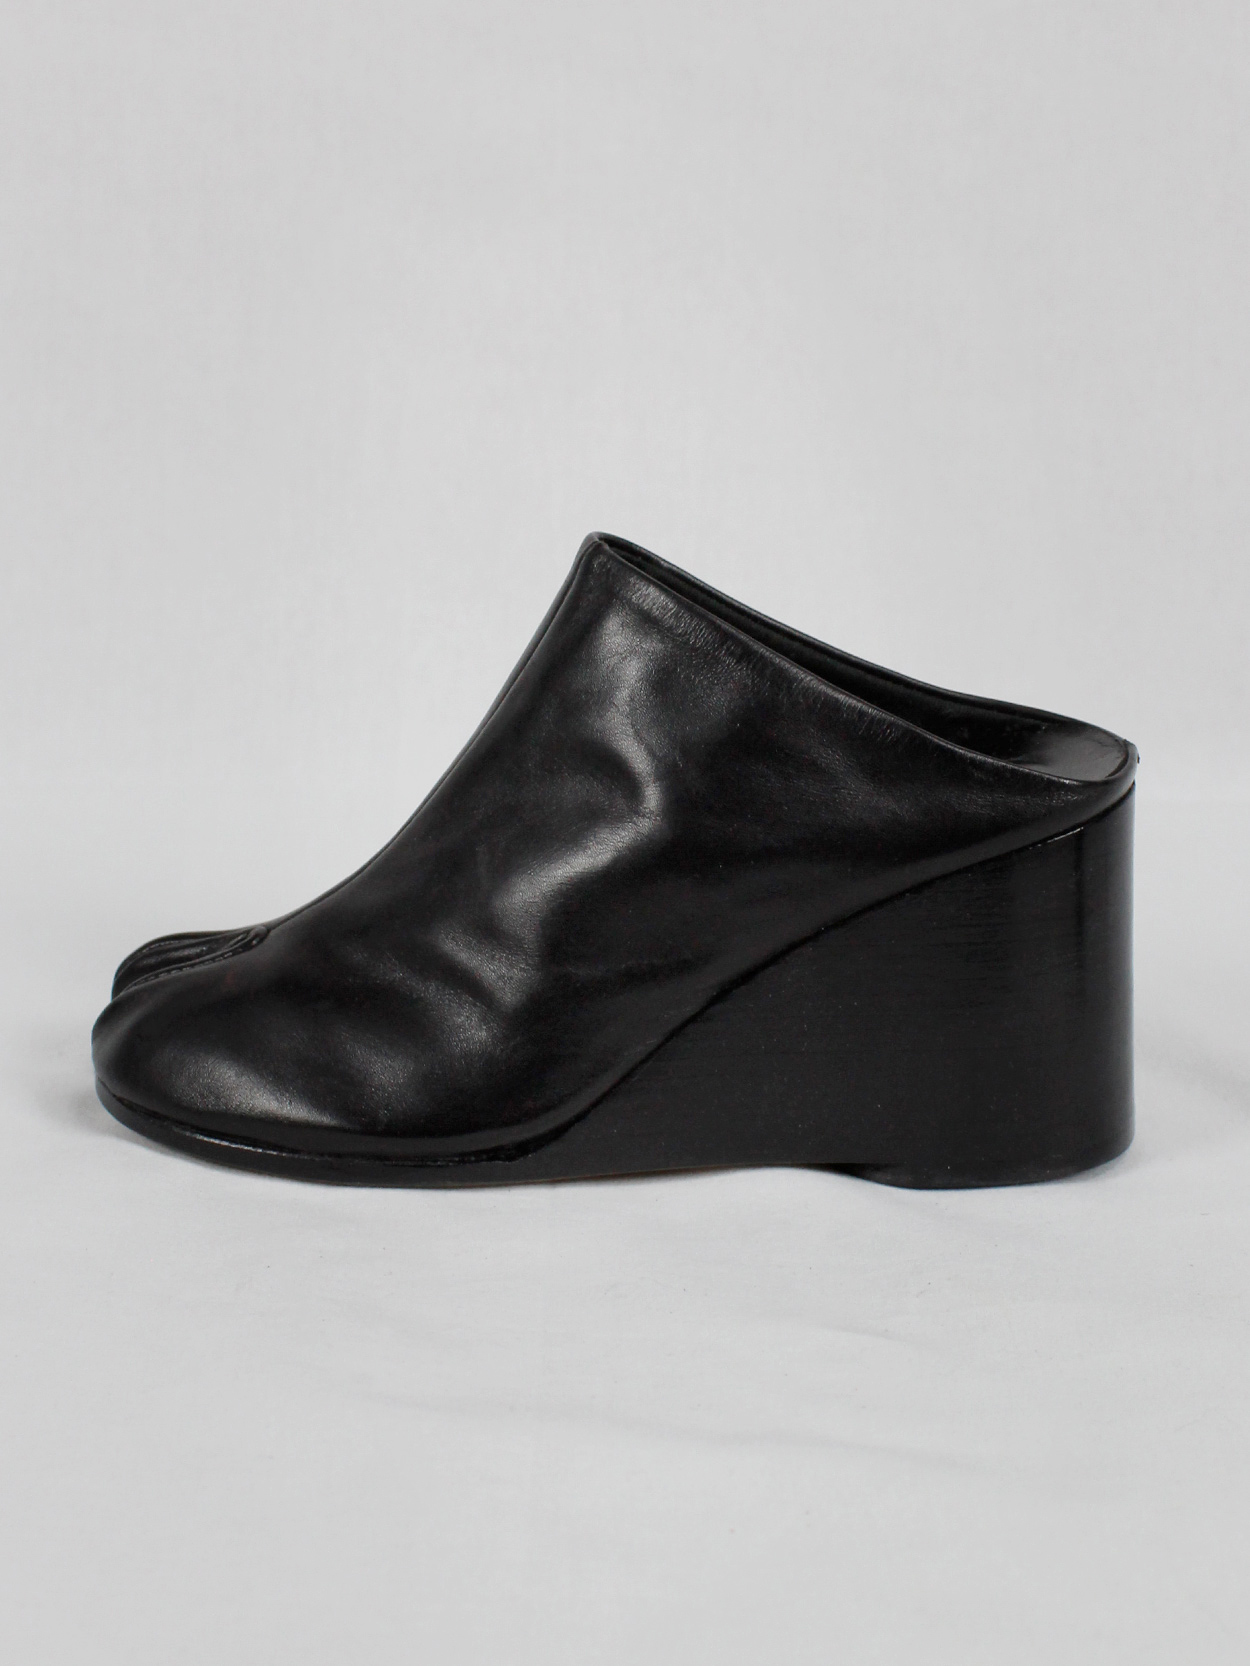 Maison Martin Margiela black tabi slippers with wedge heel spring 2002 (9)